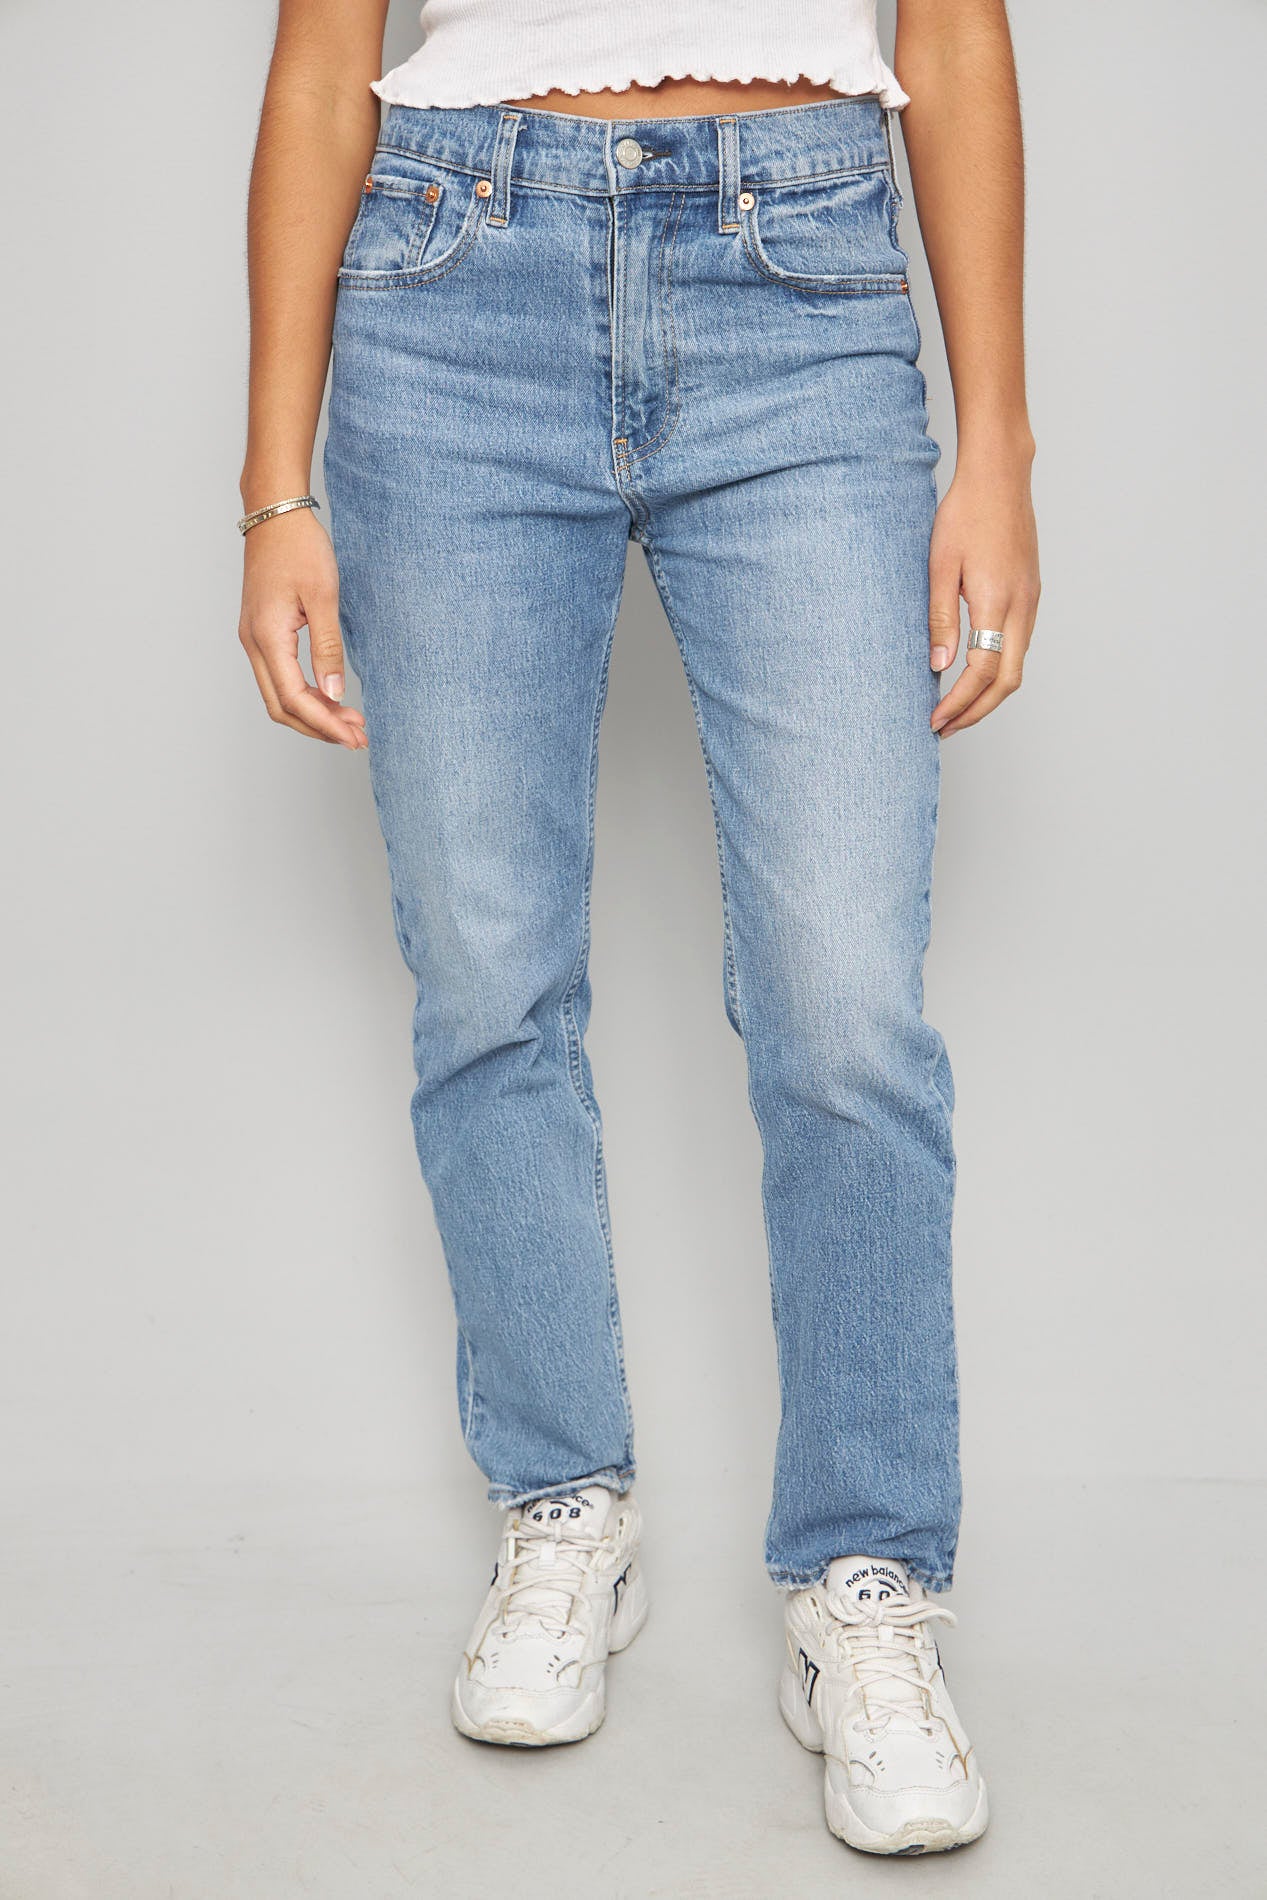 Jeans casual  azul gap talla 38 528